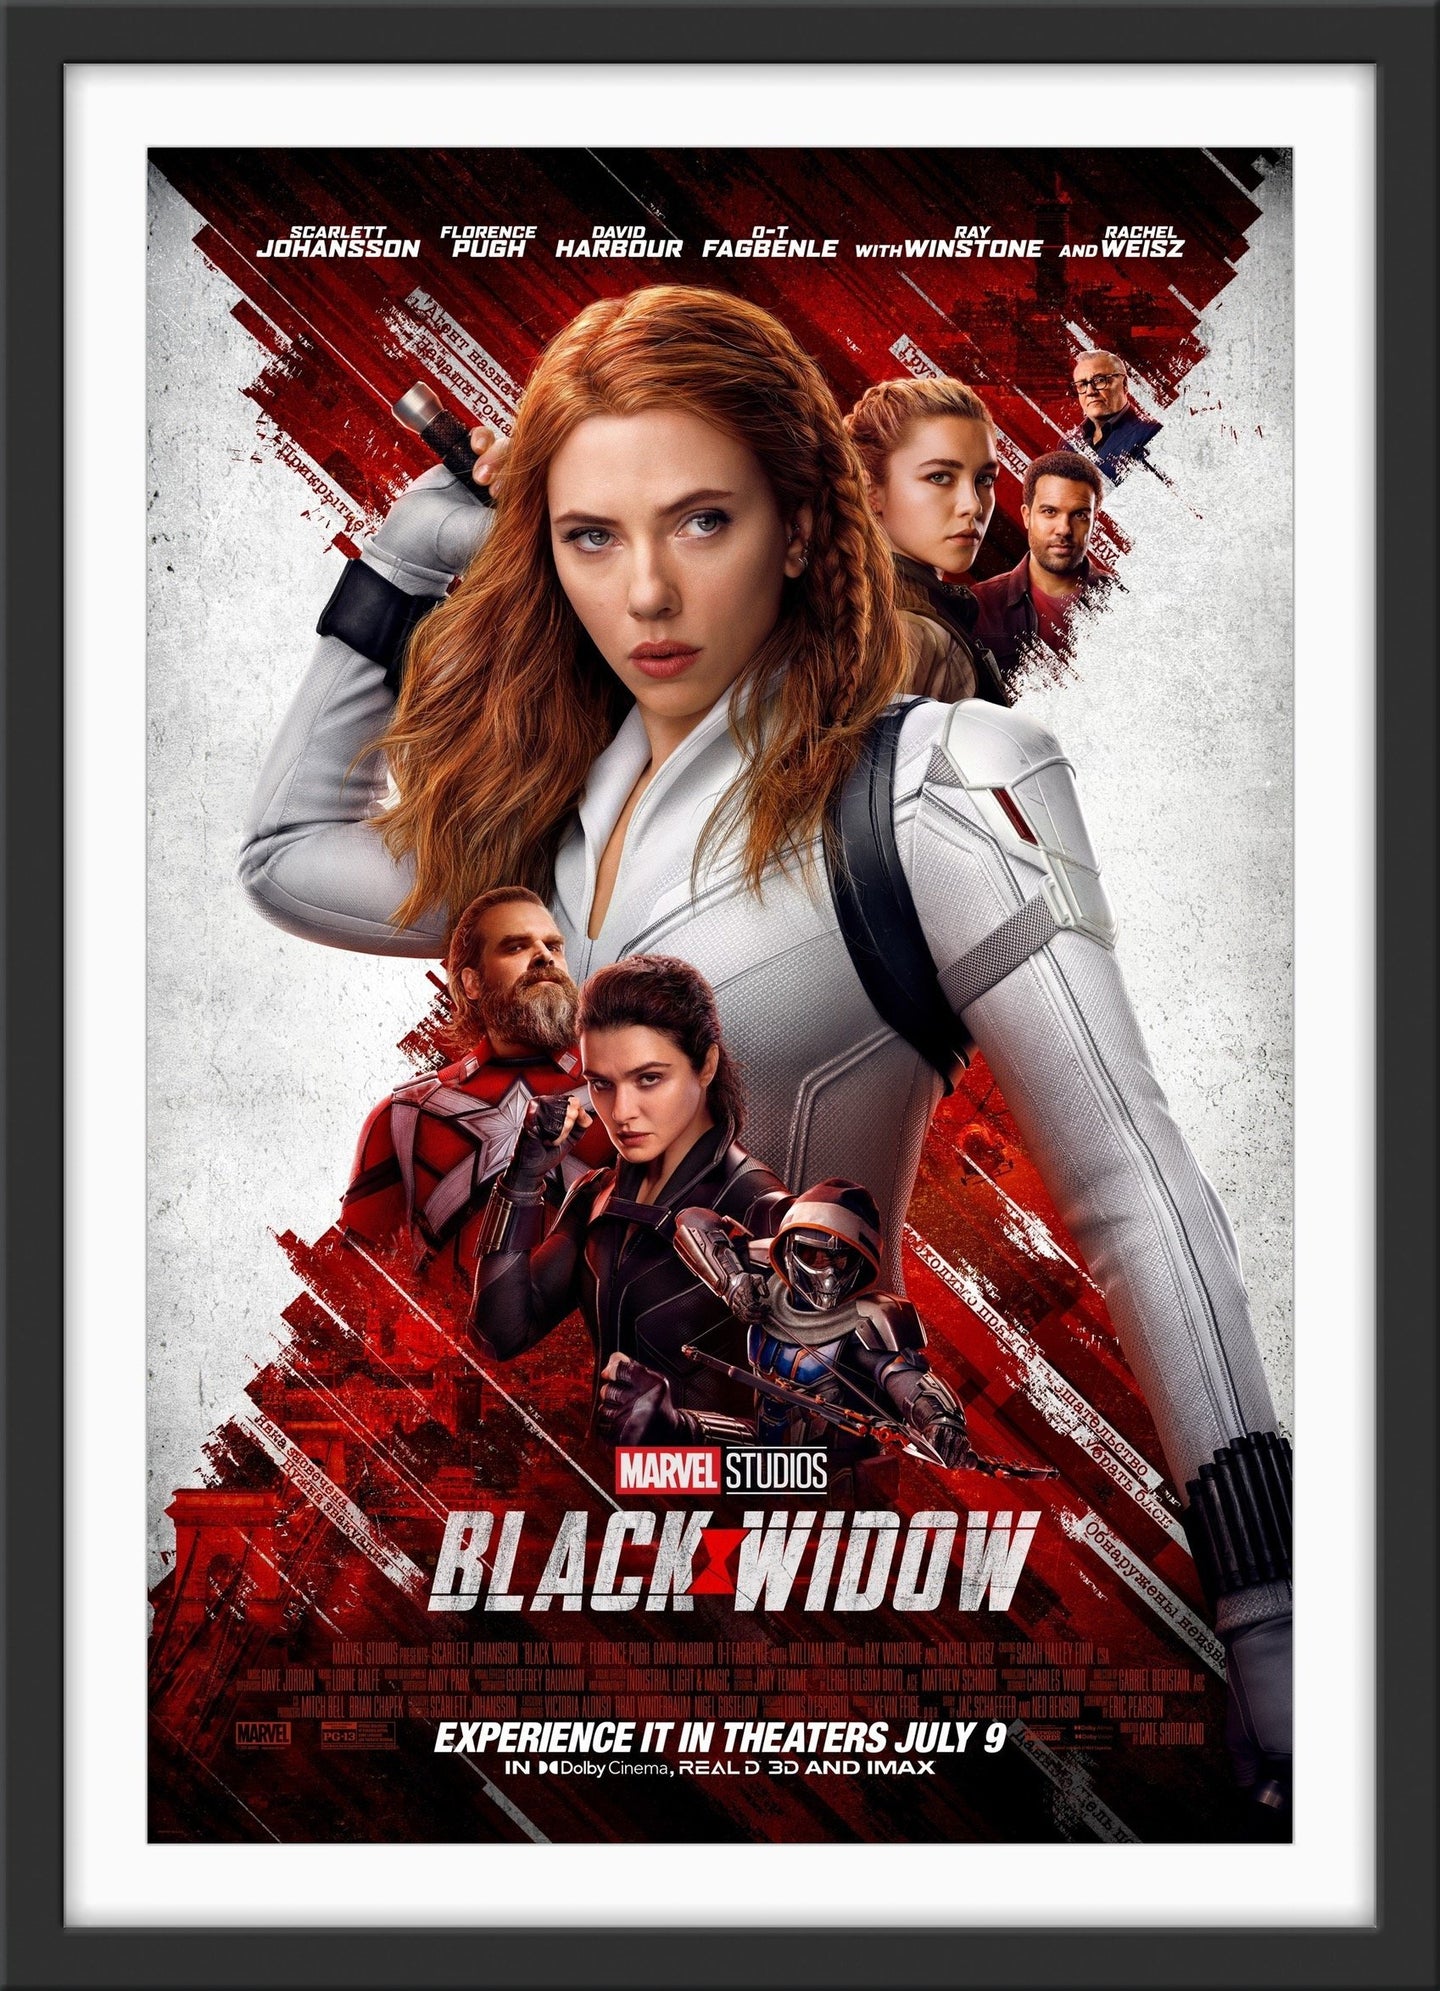 An original movie poster for the Marvel MCU film Black Widow starring Scarlett Johansson